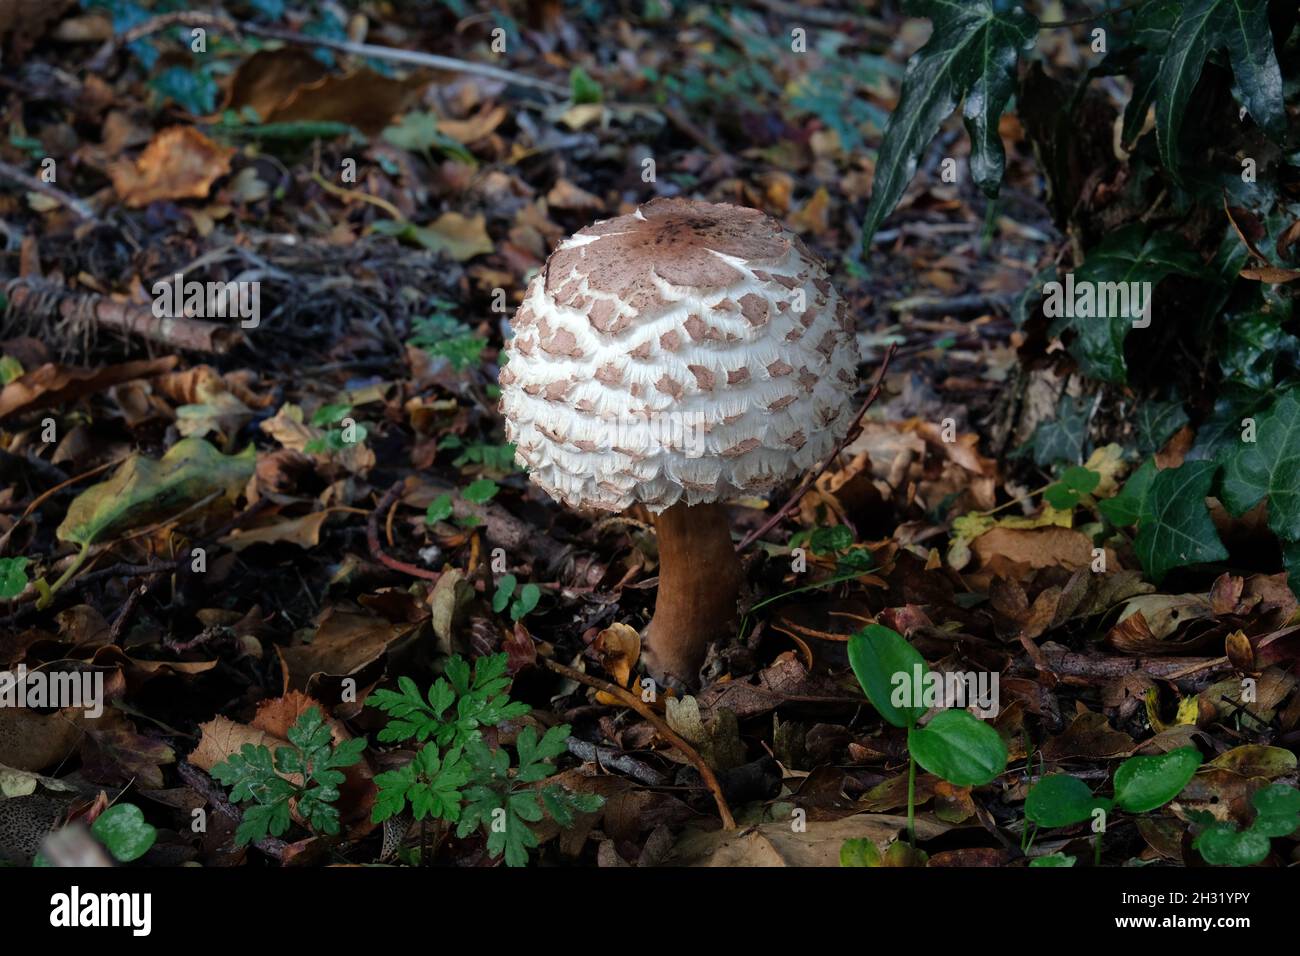 Chlorophyllum rhacodes - Shaggy Parasol - mushroom in the soil beneath a woodland hedgerow in England, UK Stock Photo